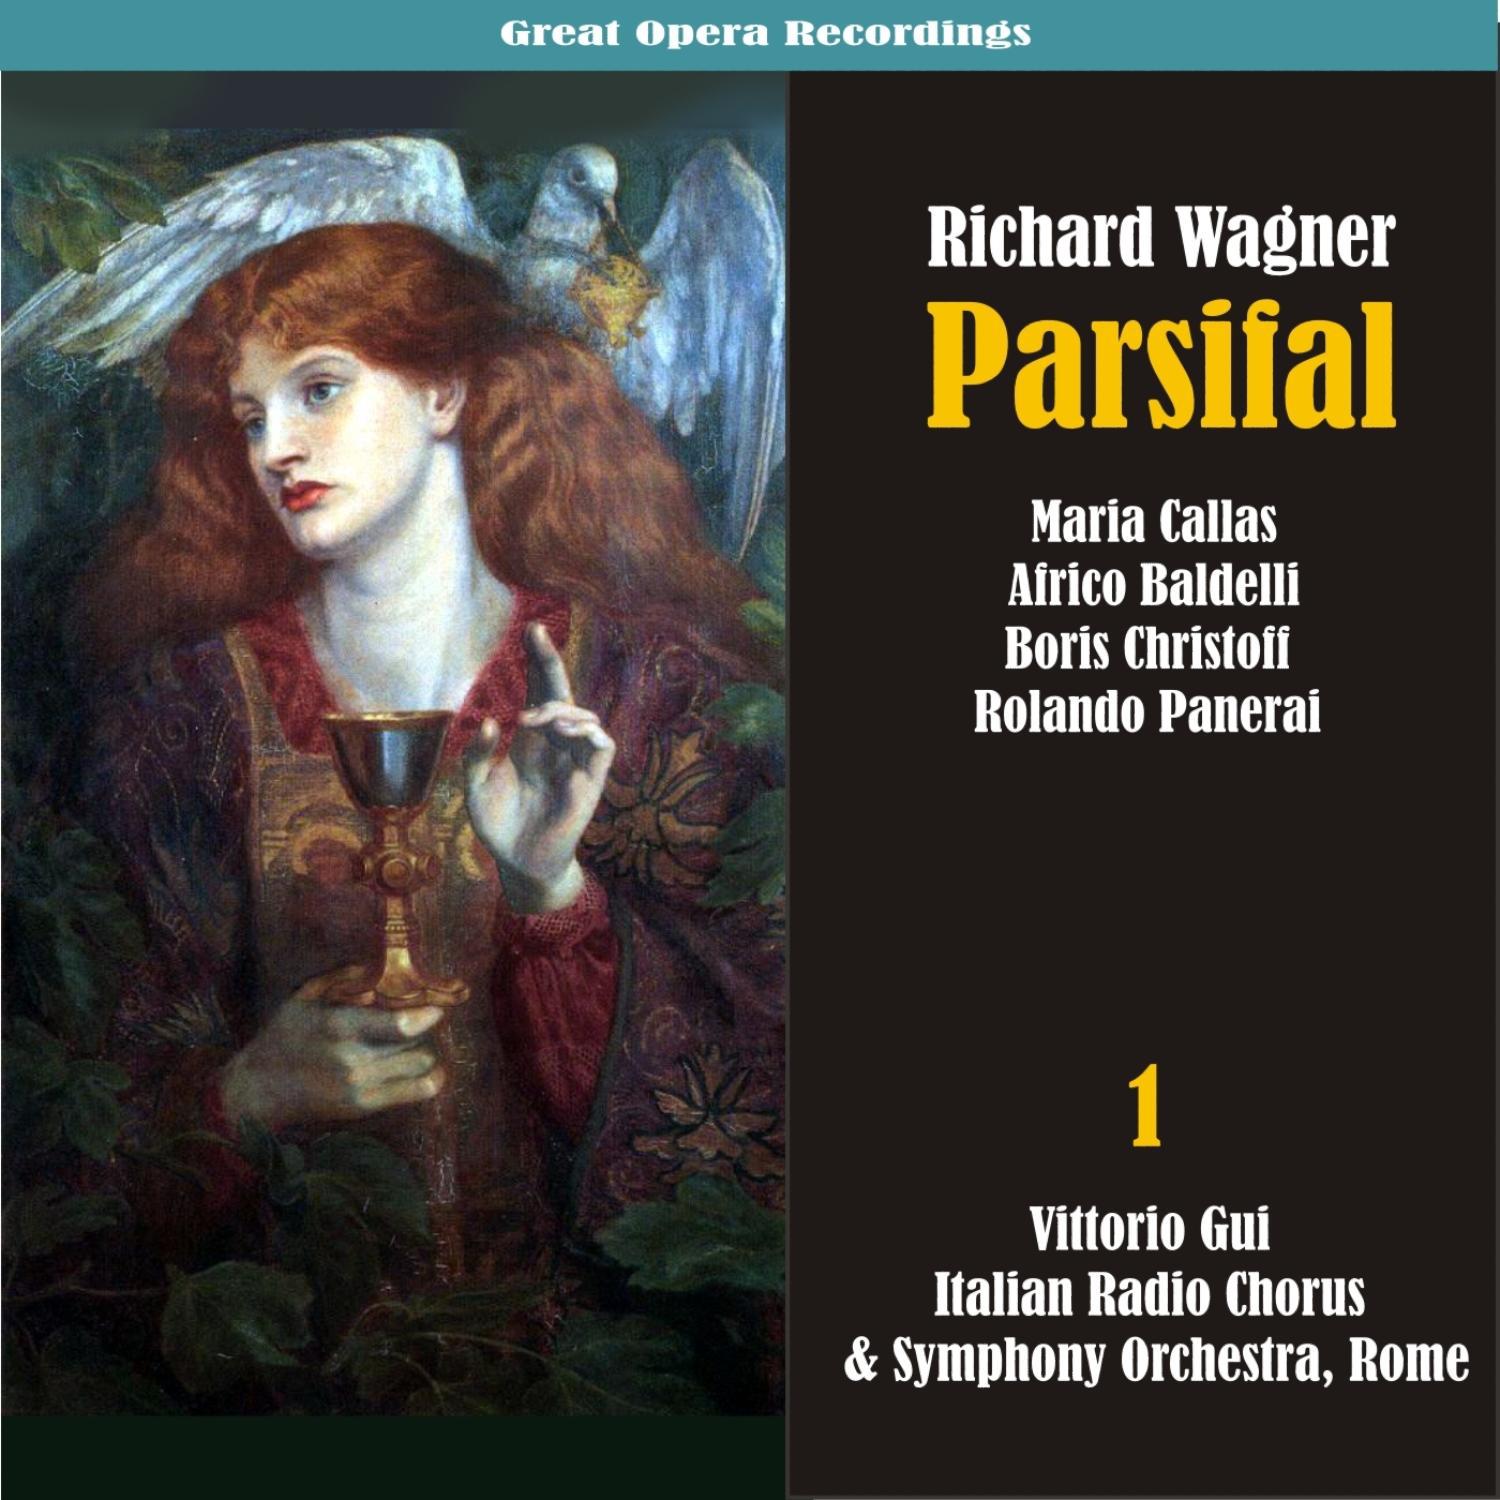 Italian Radio Chorus Rome - Parsifal: Act II, 